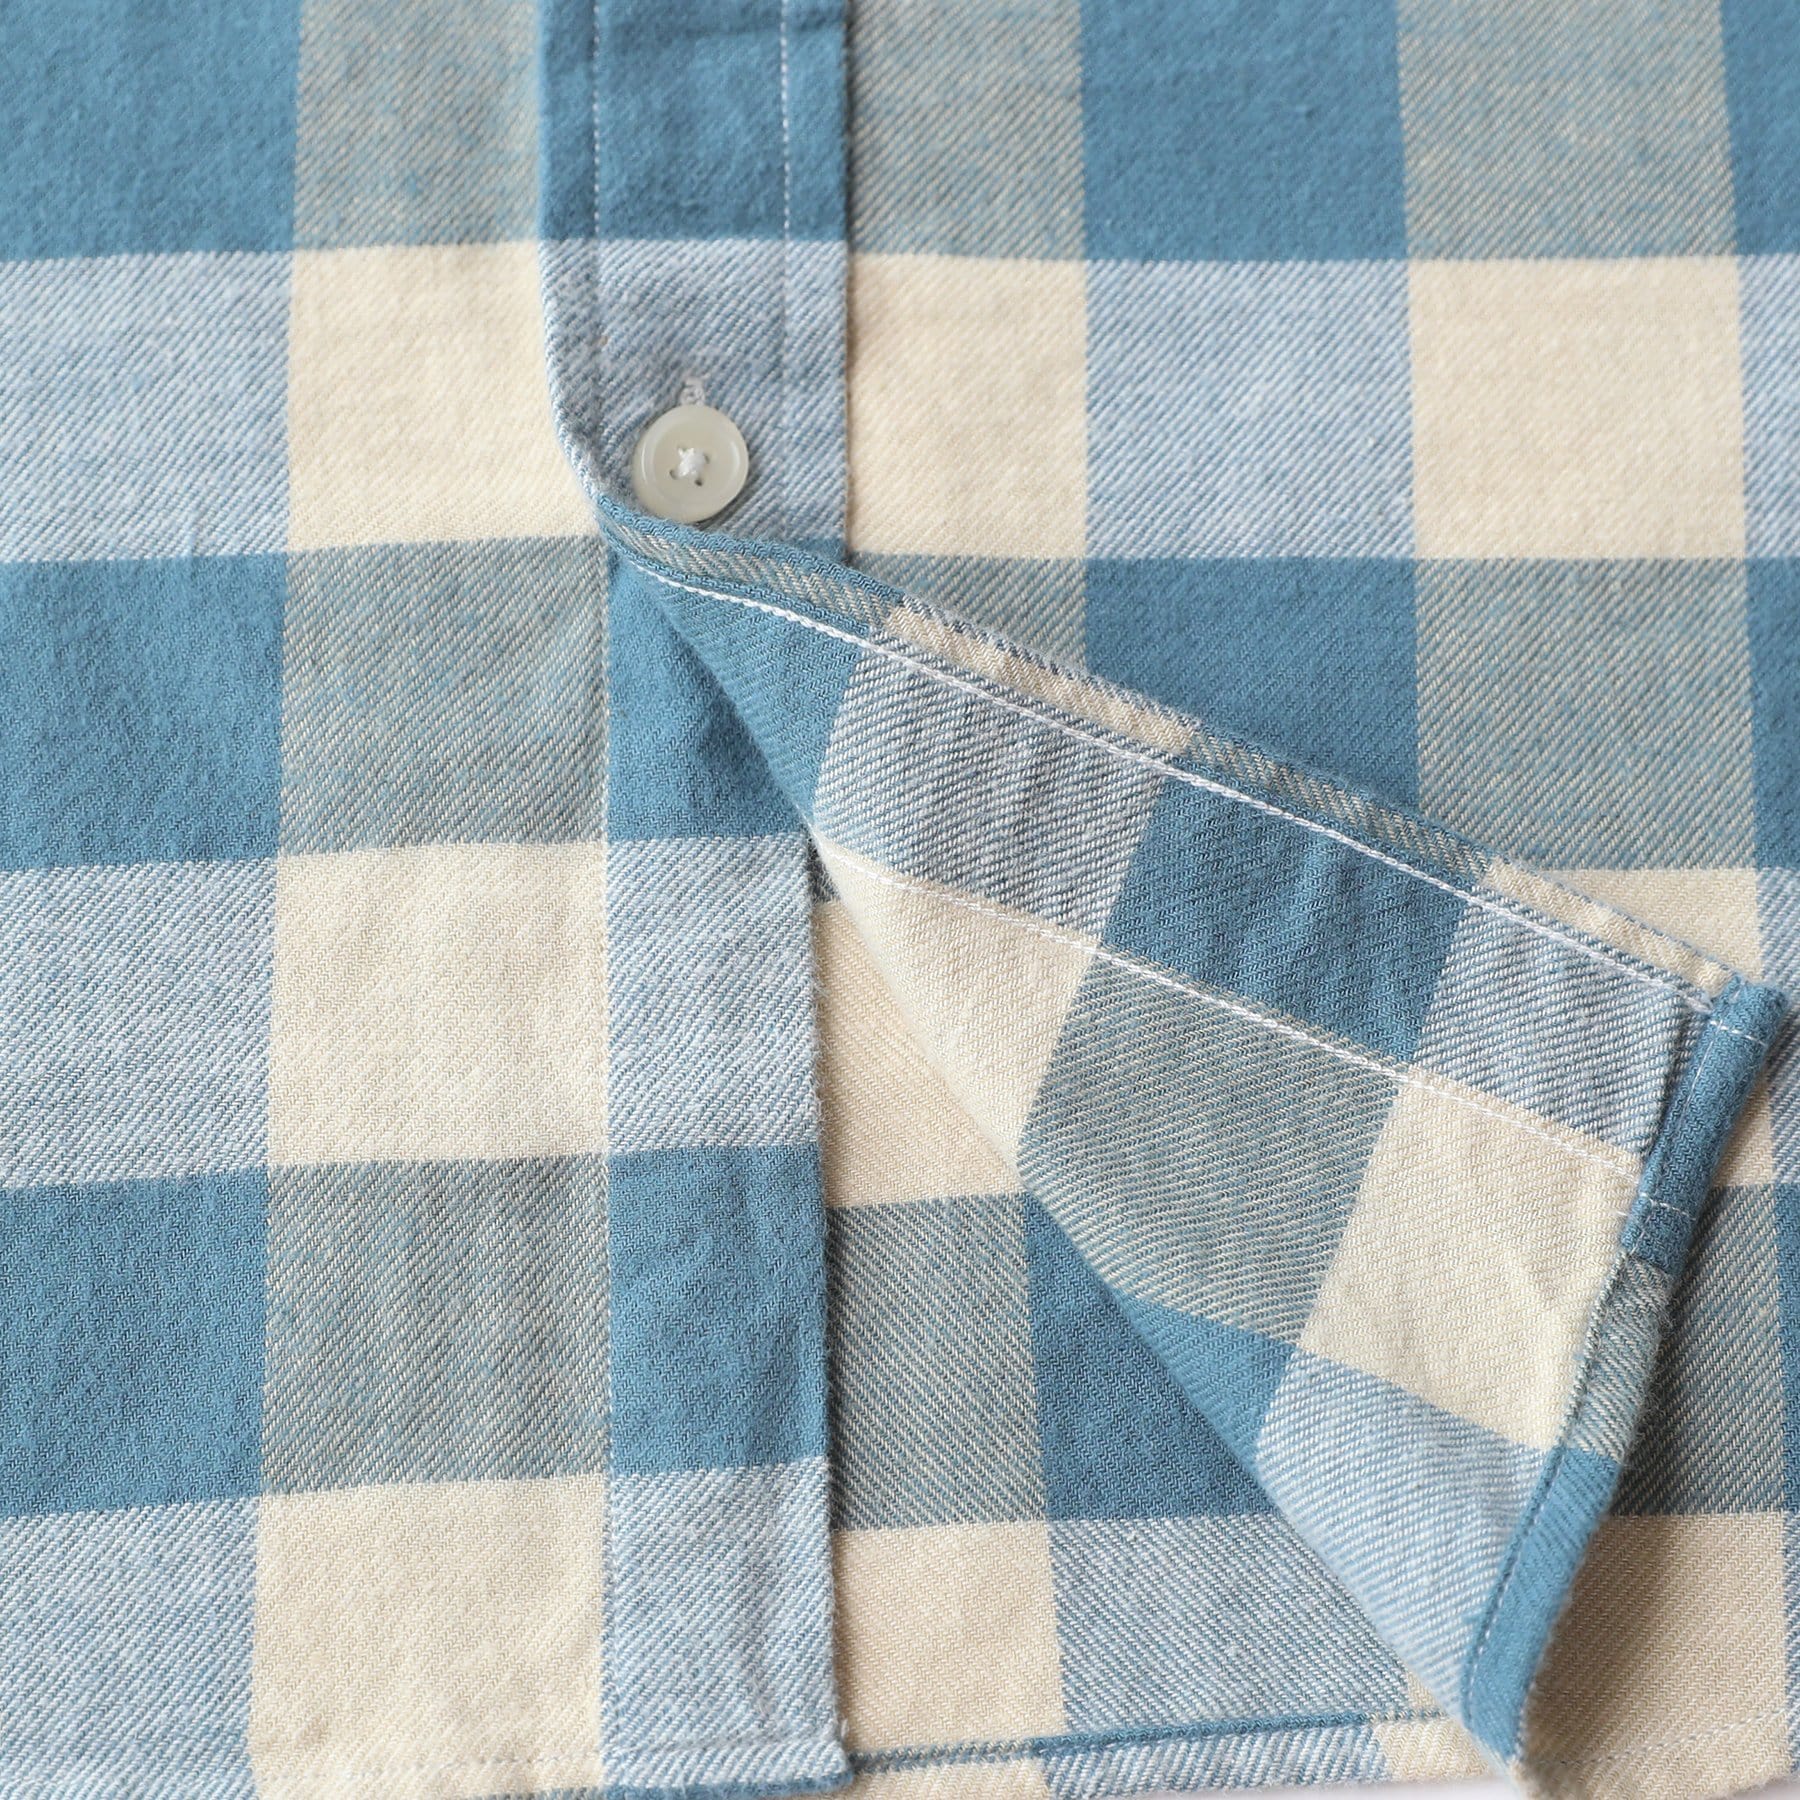 Men's Plaid Flannel Long Sleeve Shirts #0325